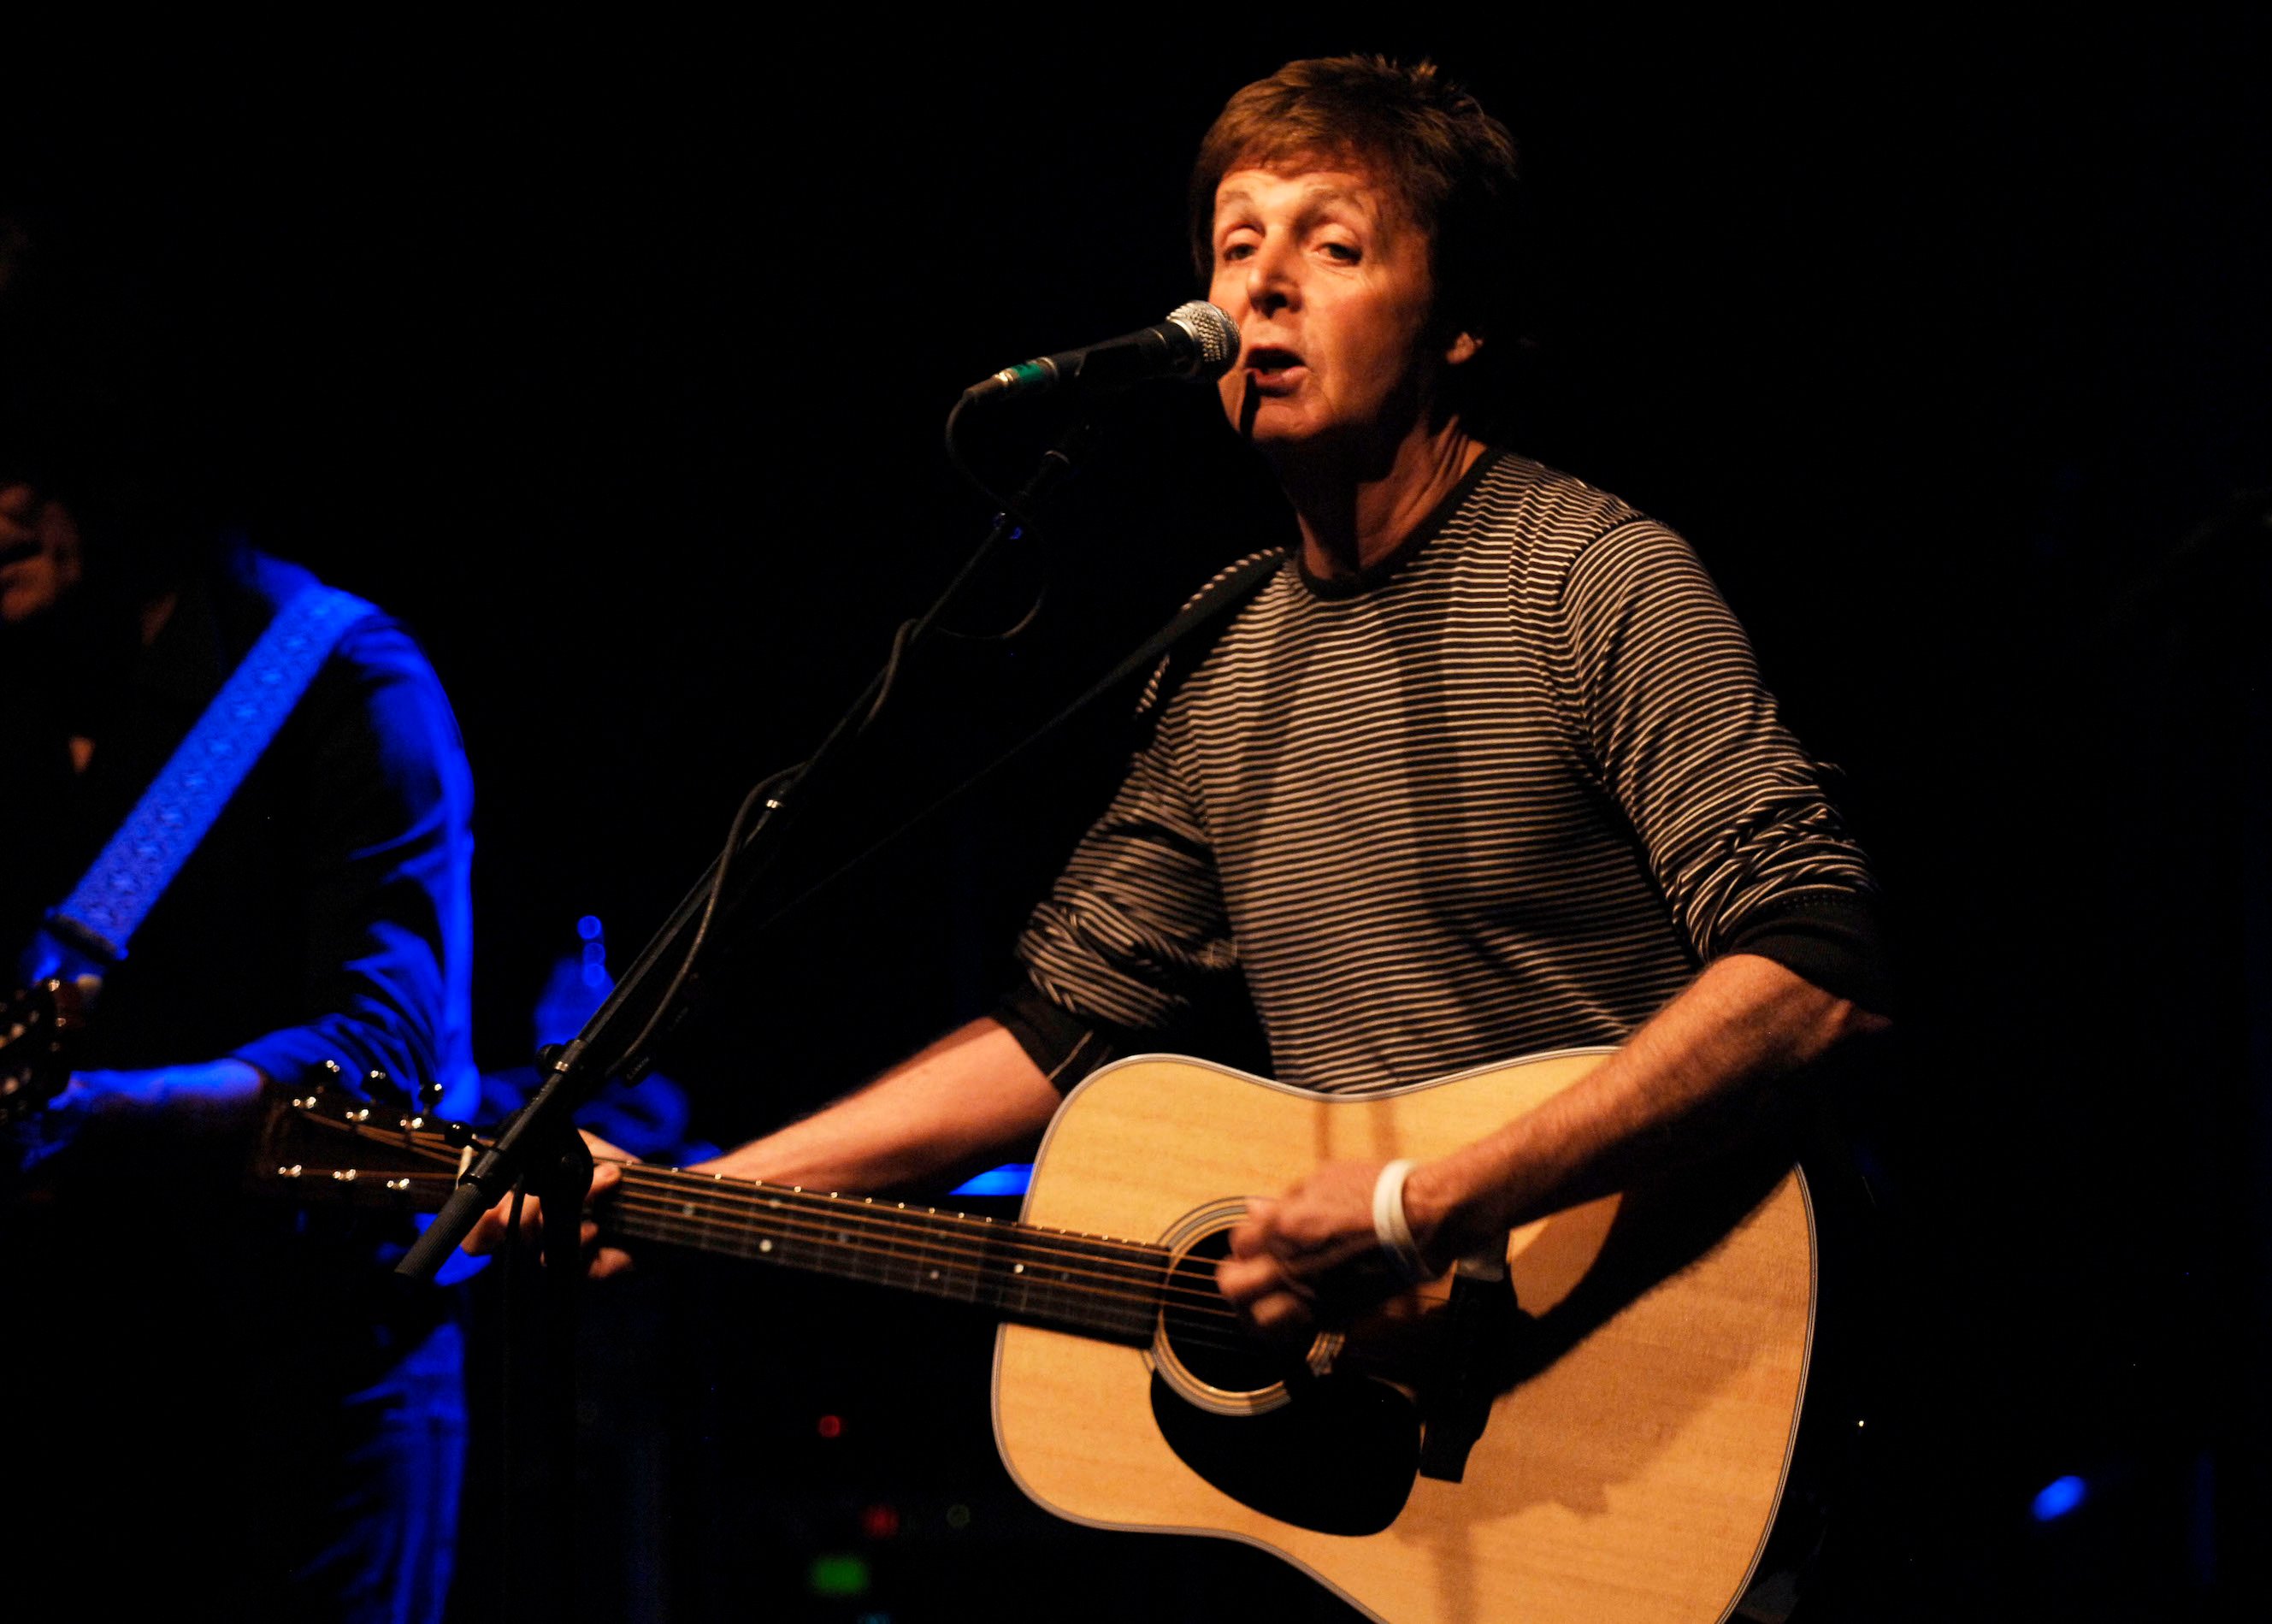 Paul McCartney performs at Highline Ballroom in New York City